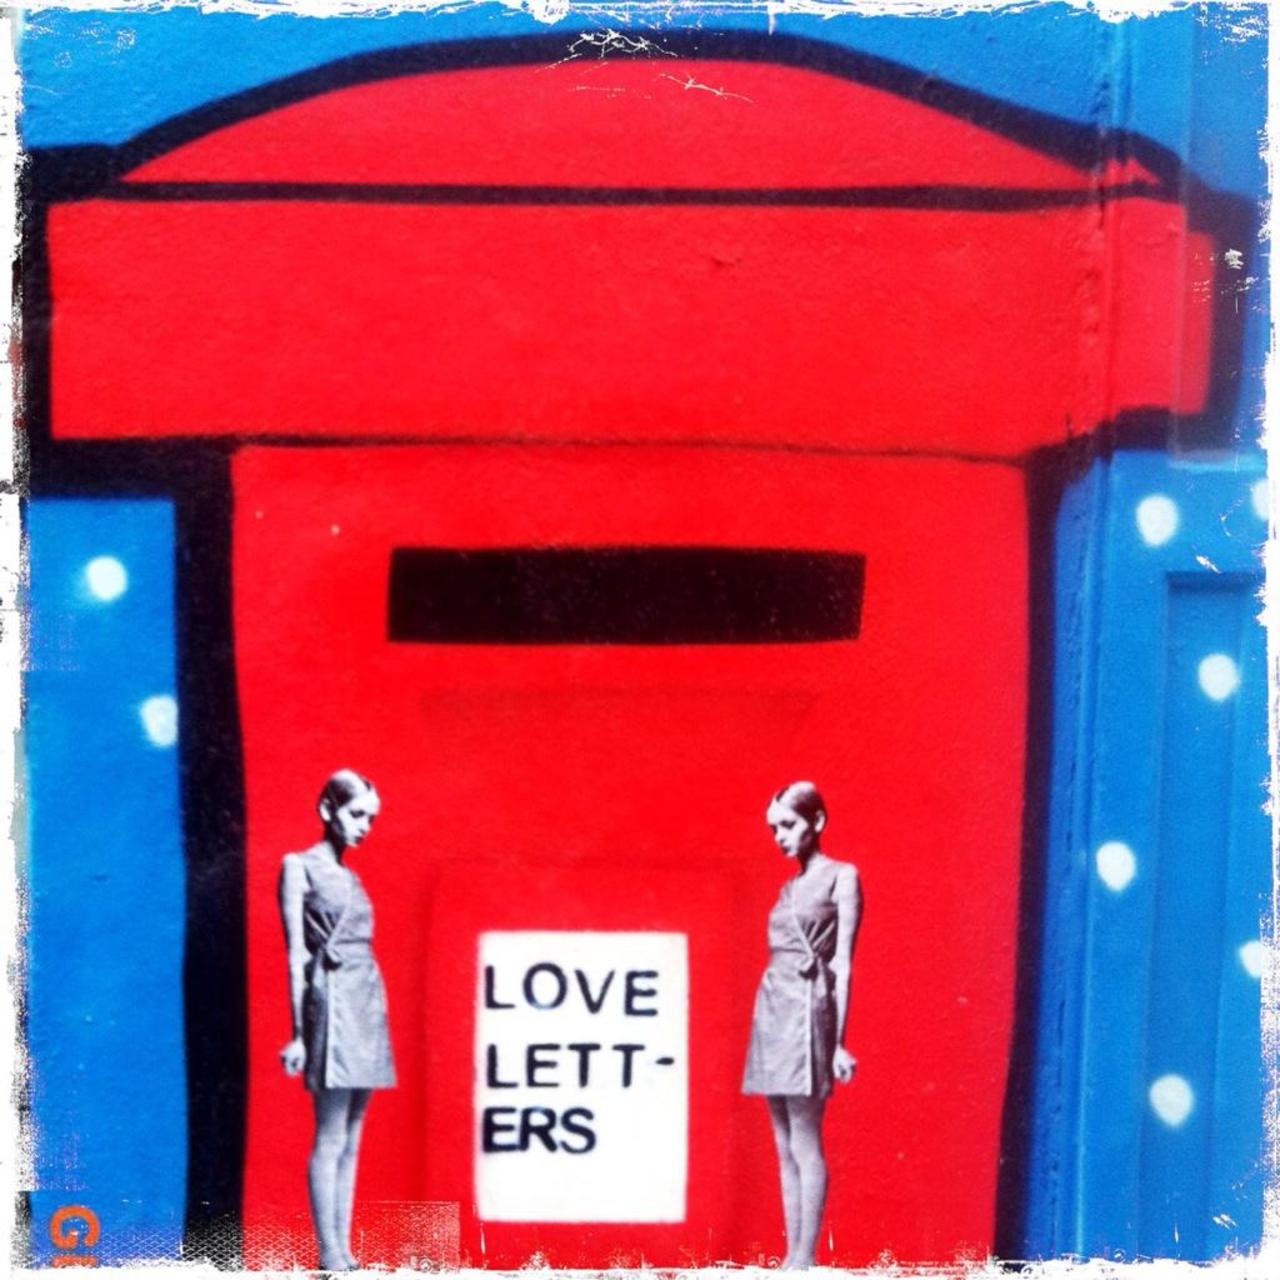 Love Letters... 

Streetart by @D7606ART on White Church Lane #art #graffiti http://t.co/MRoB6t0CZe